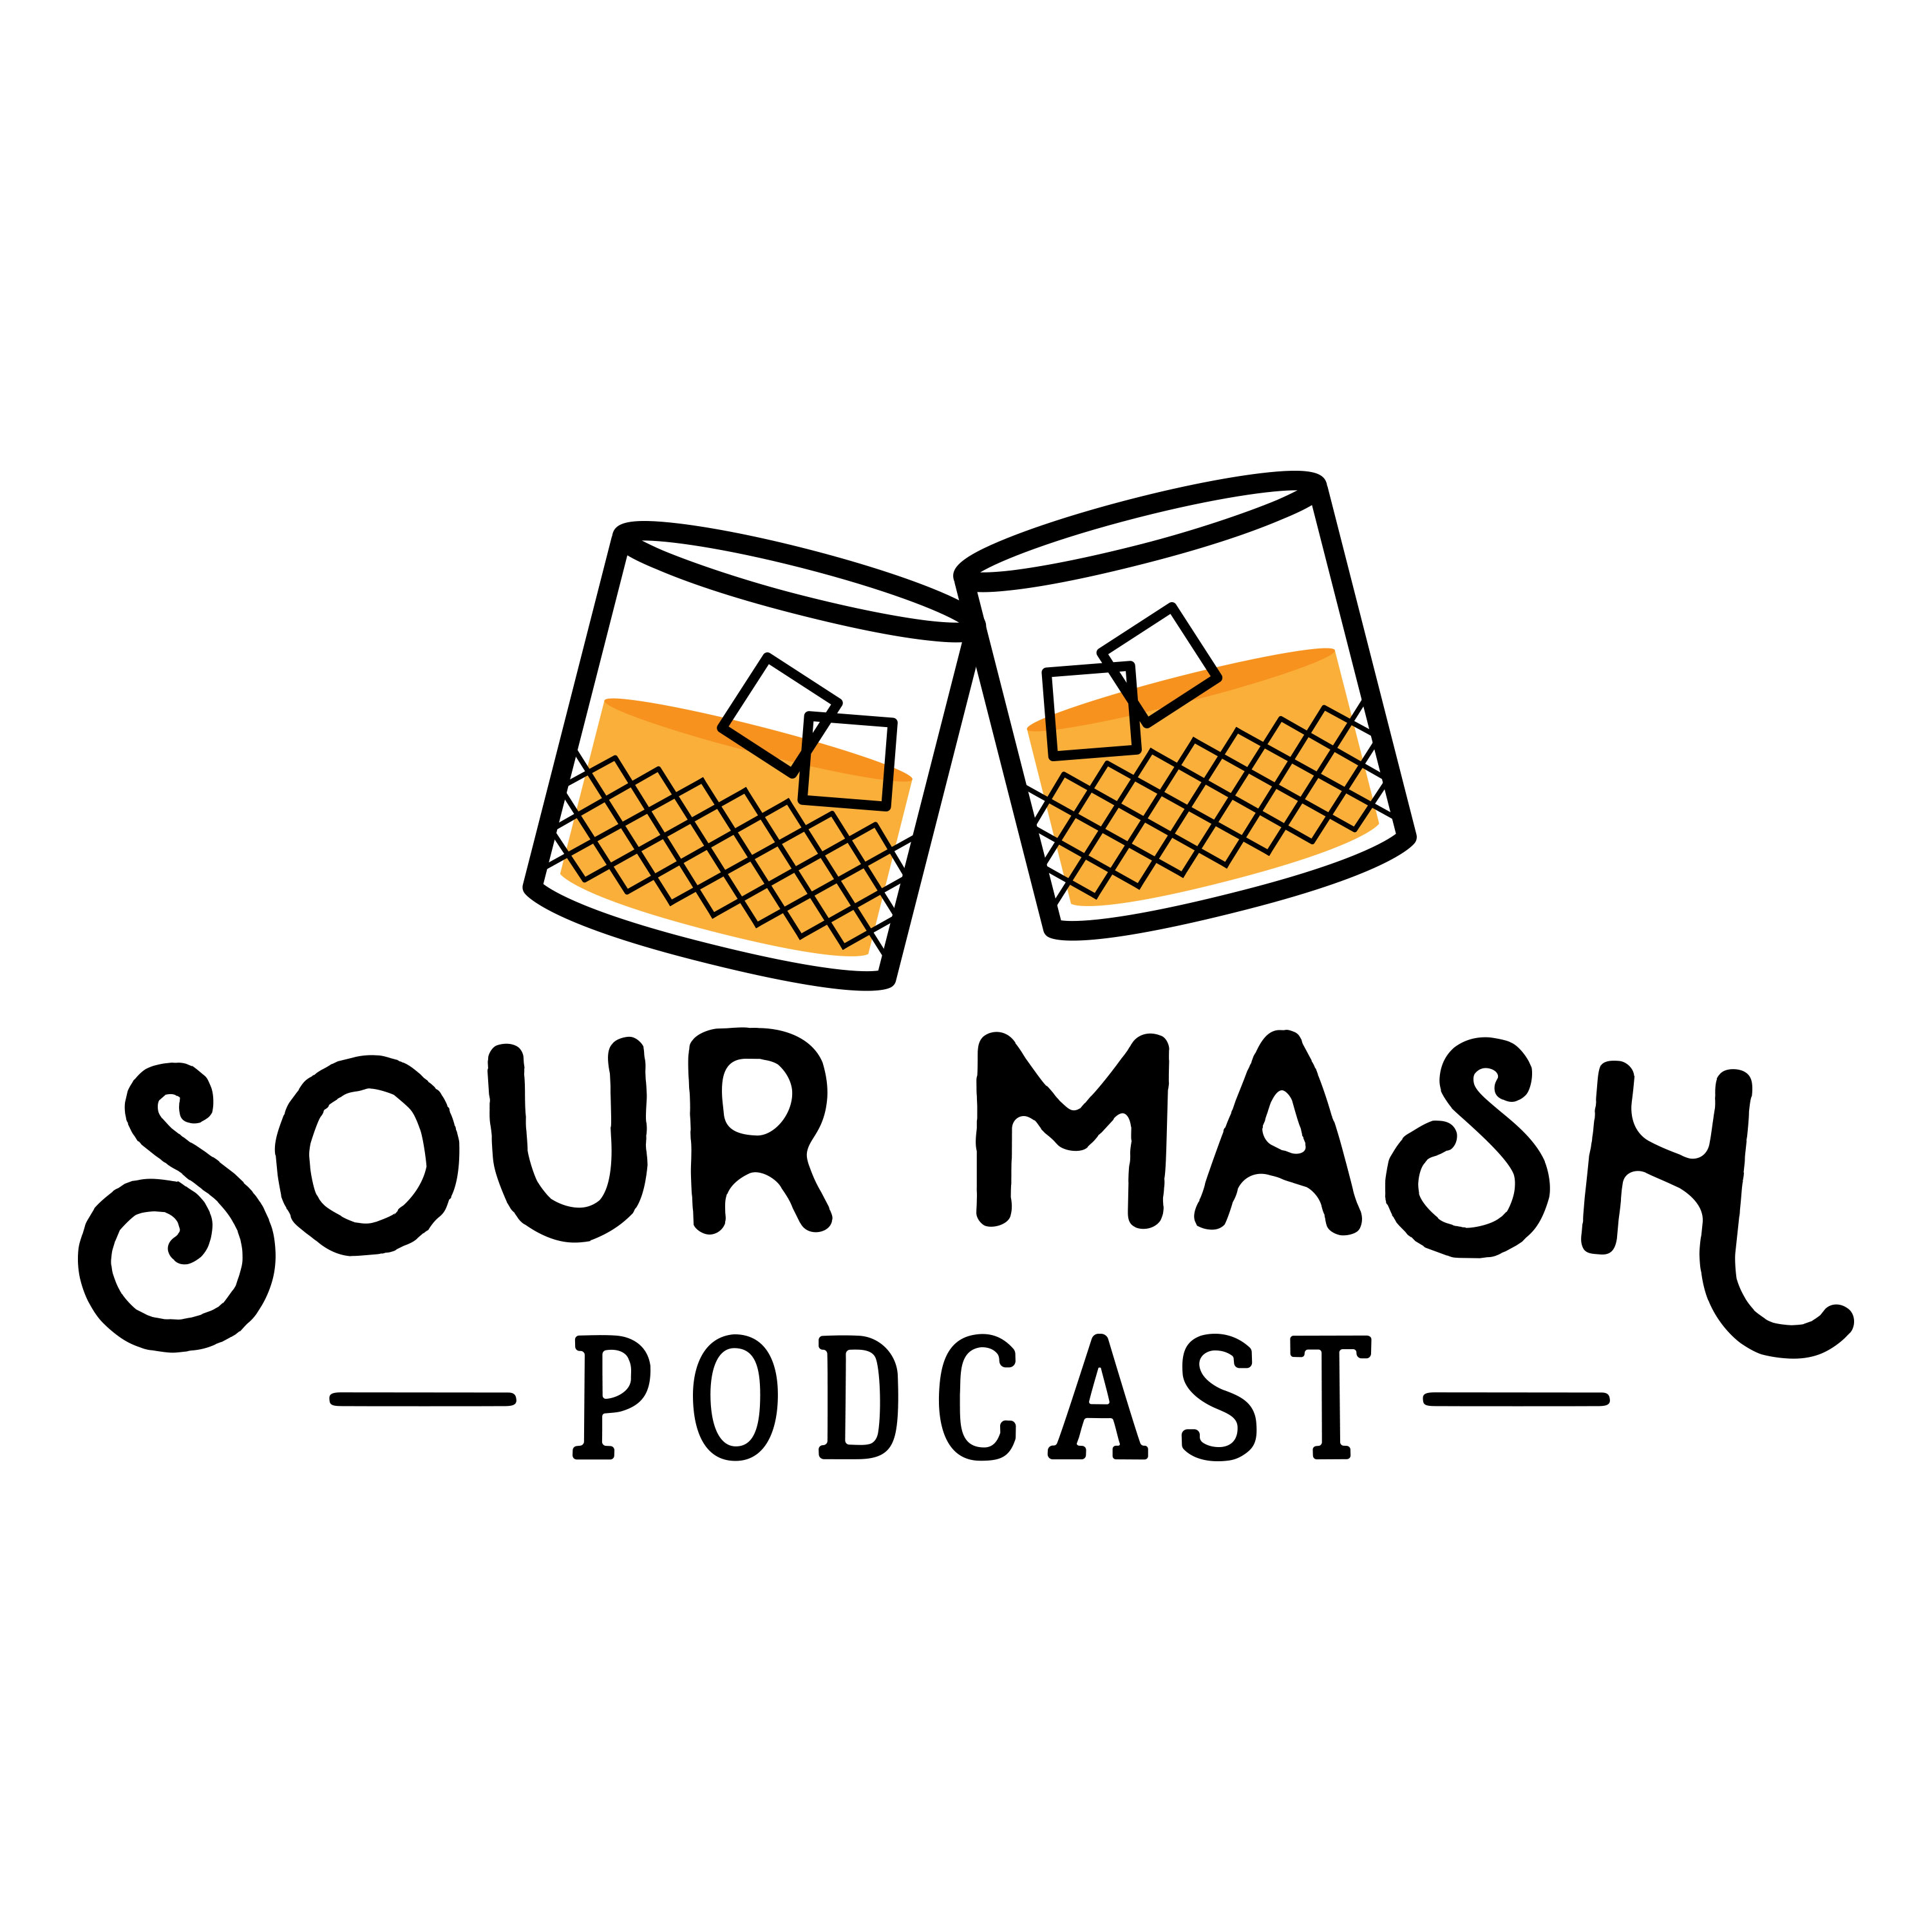 Sour Mash Podcast